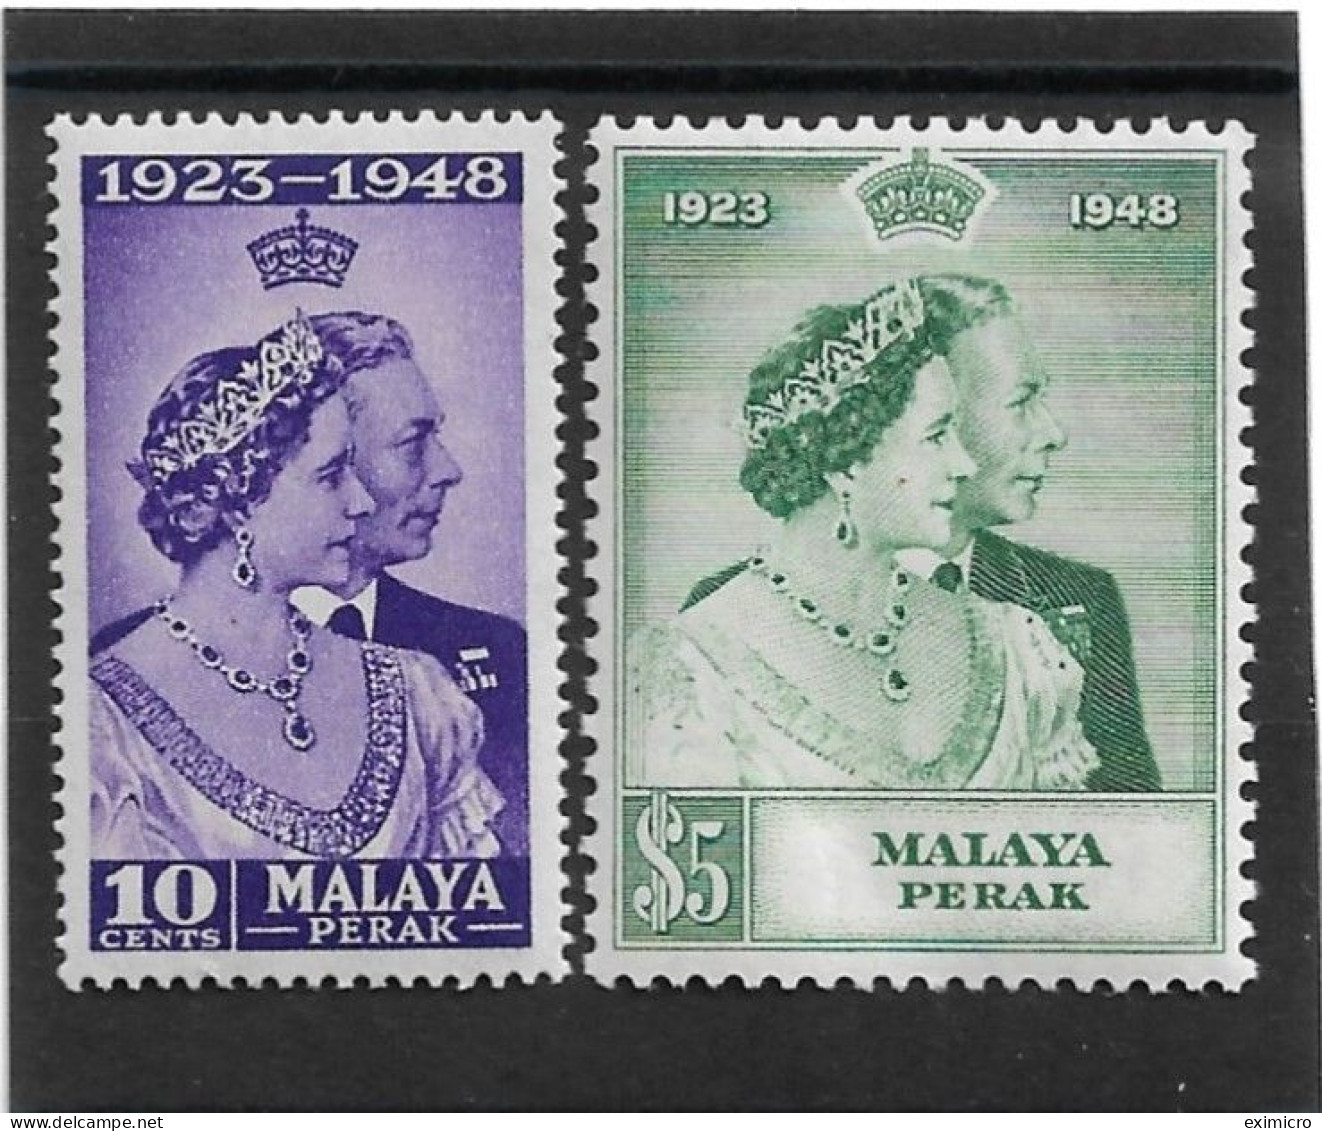 MALAYA - PERAK 1948 SILVER WEDDING SET LIGHTLY MOUNTED MINT Cat £28+ - Perak